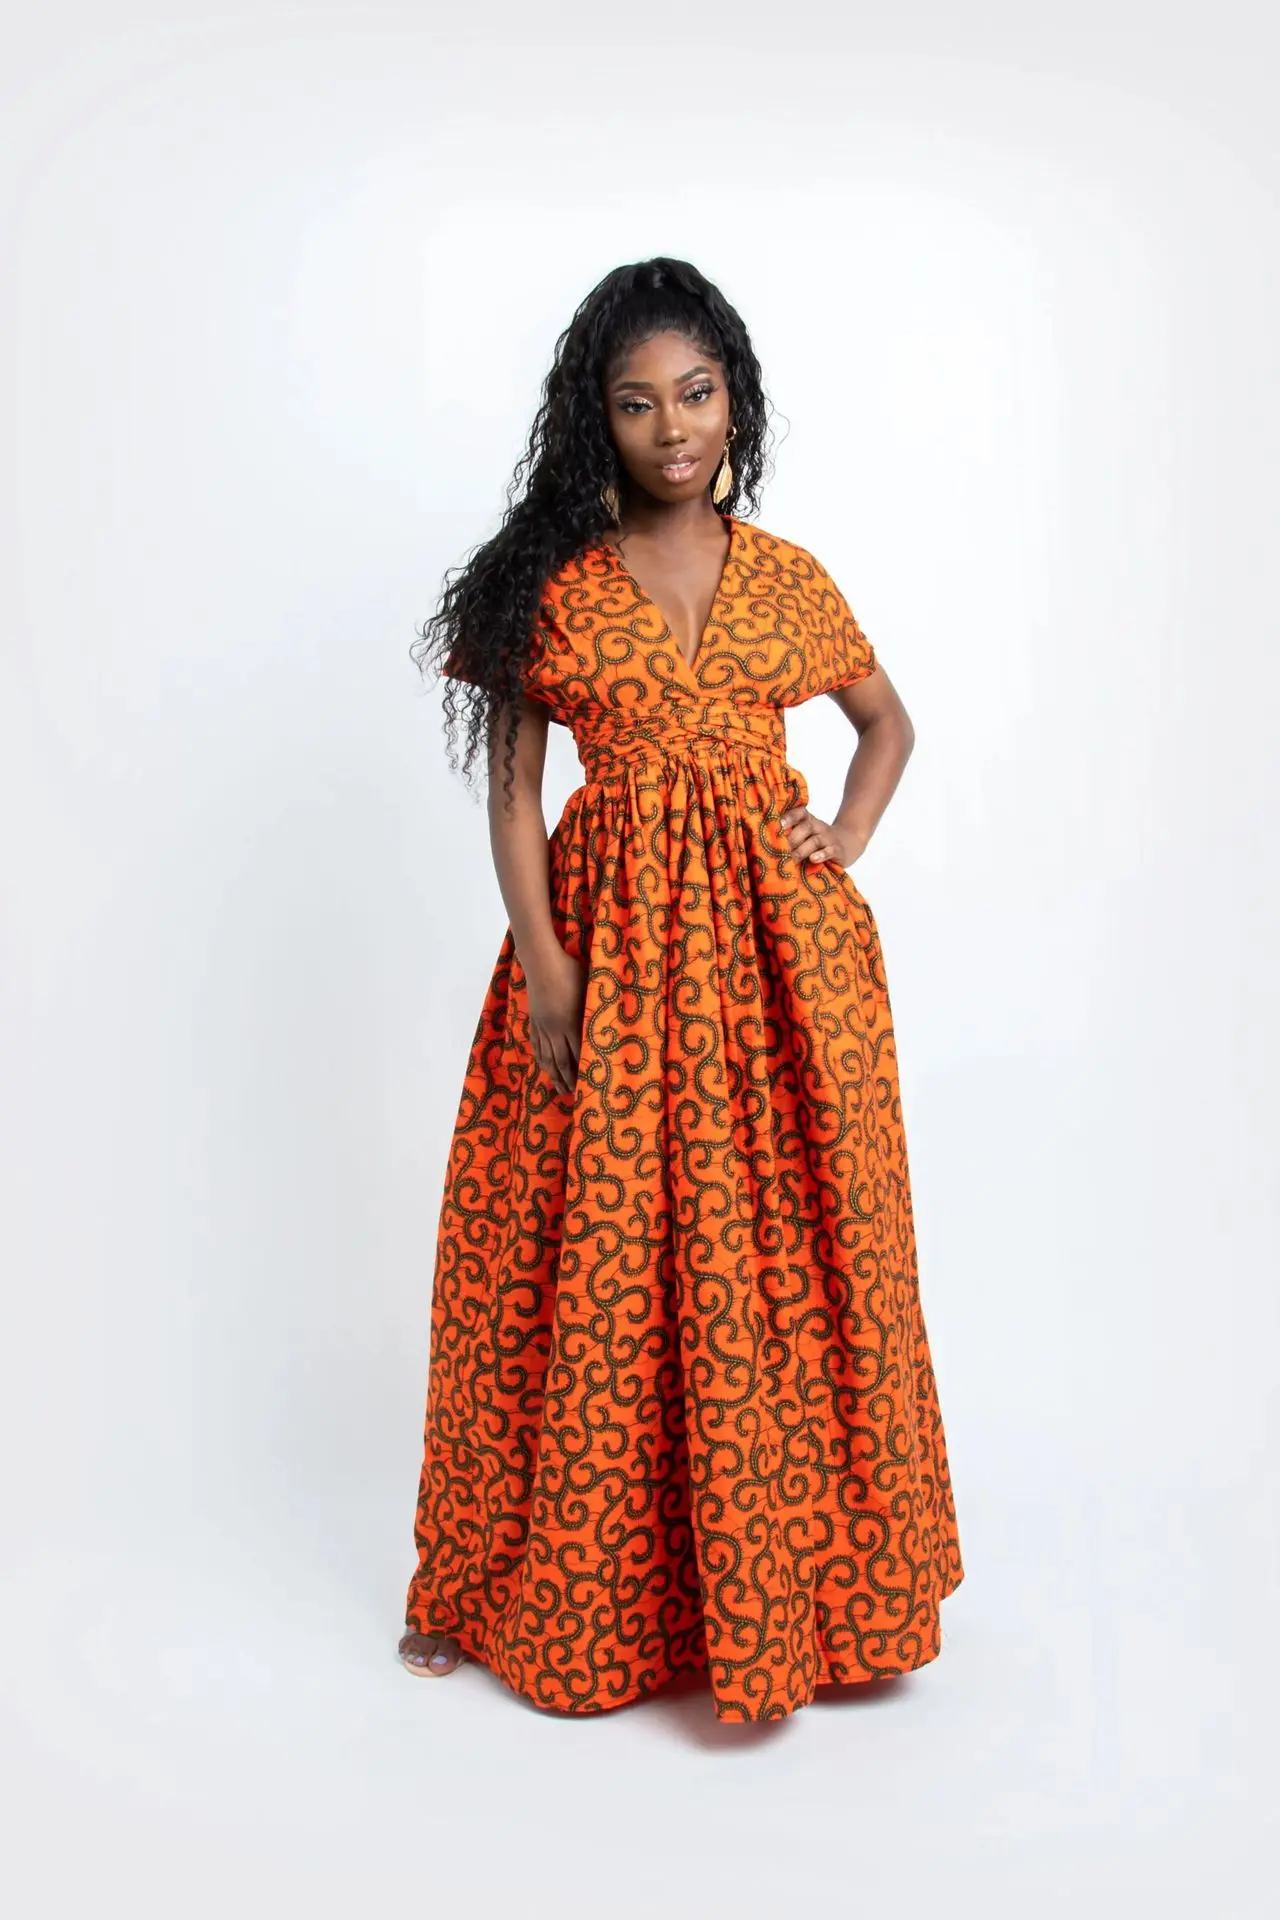 Longue robe africaine wax pour femmes 533